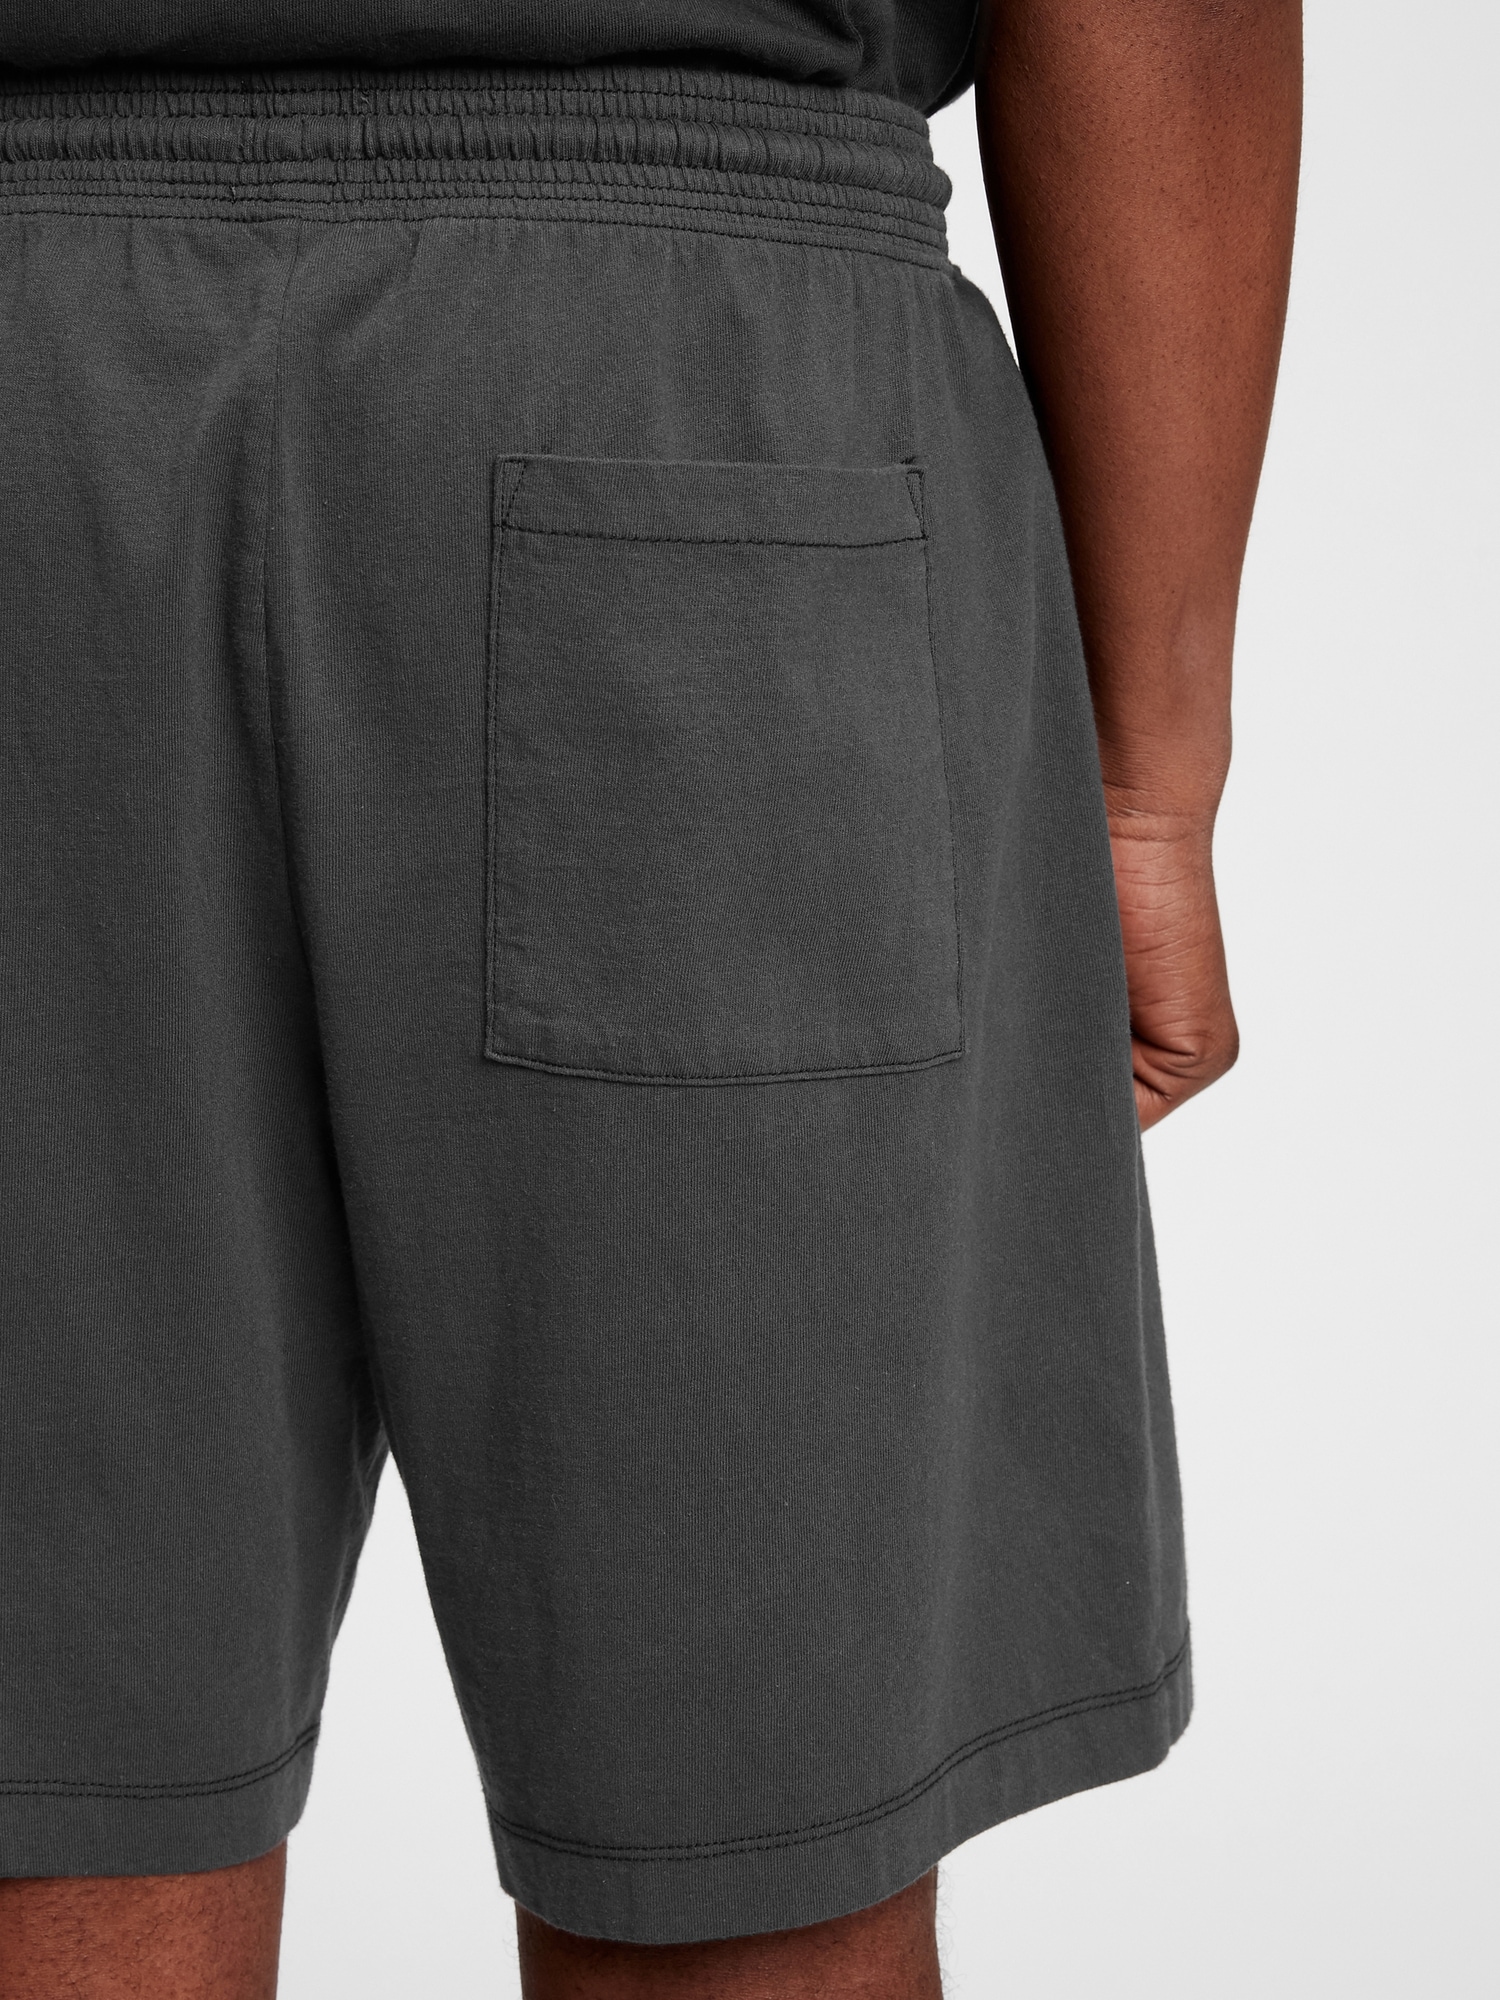 Jersey Pull-On Shorts | Gap